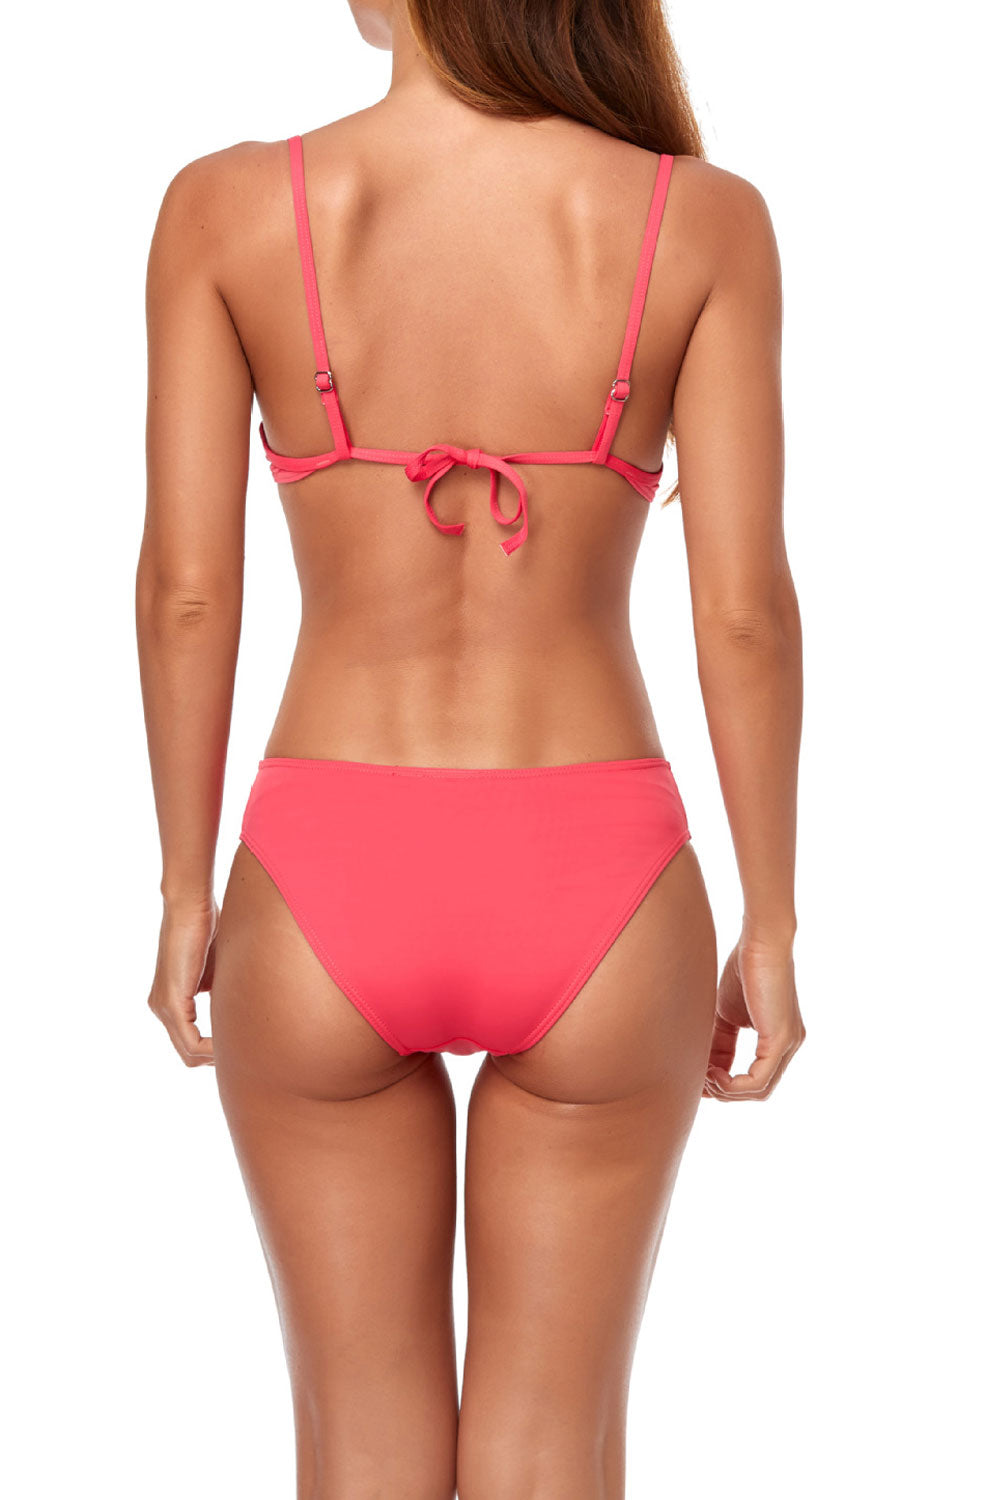 New bikini small fresh swimsuit women's conservative split bikini ready-made sexy swimsuit